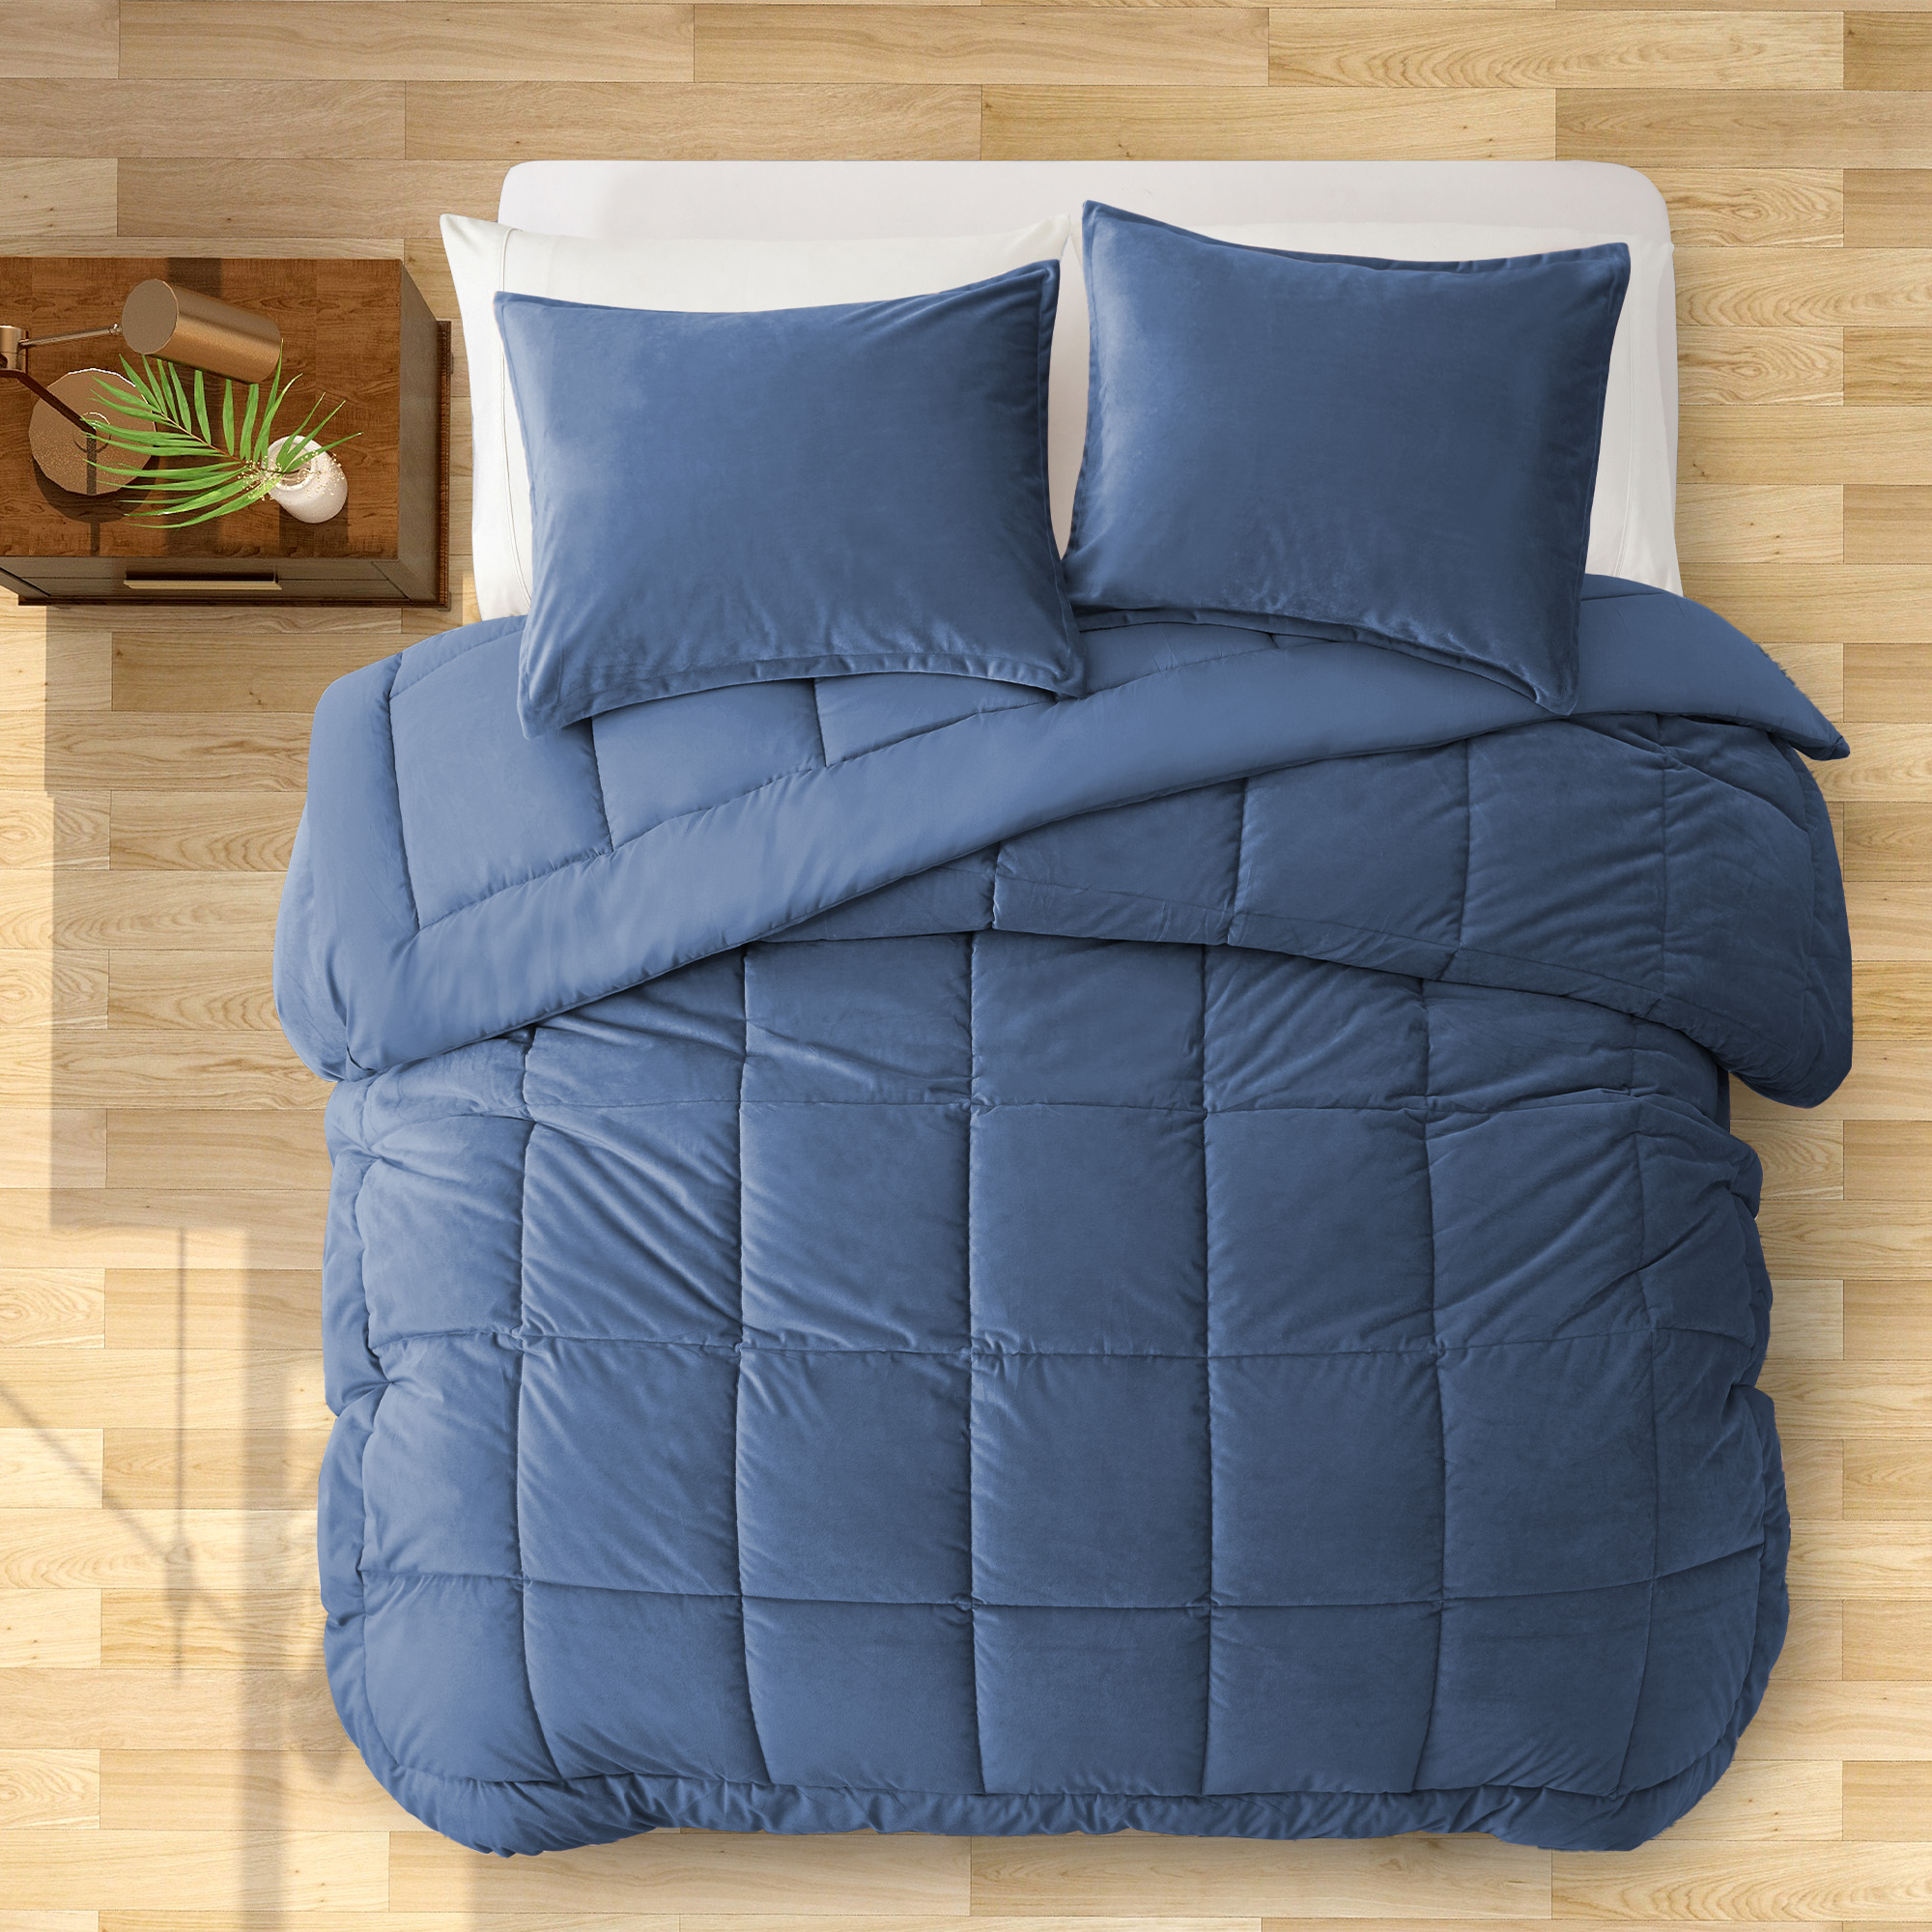 2 Or 3 Pieces Luxury Ultra Soft Velvet Solid Duvet Set-All Season Reversible Down Alternative Comforter Set - Twin Size